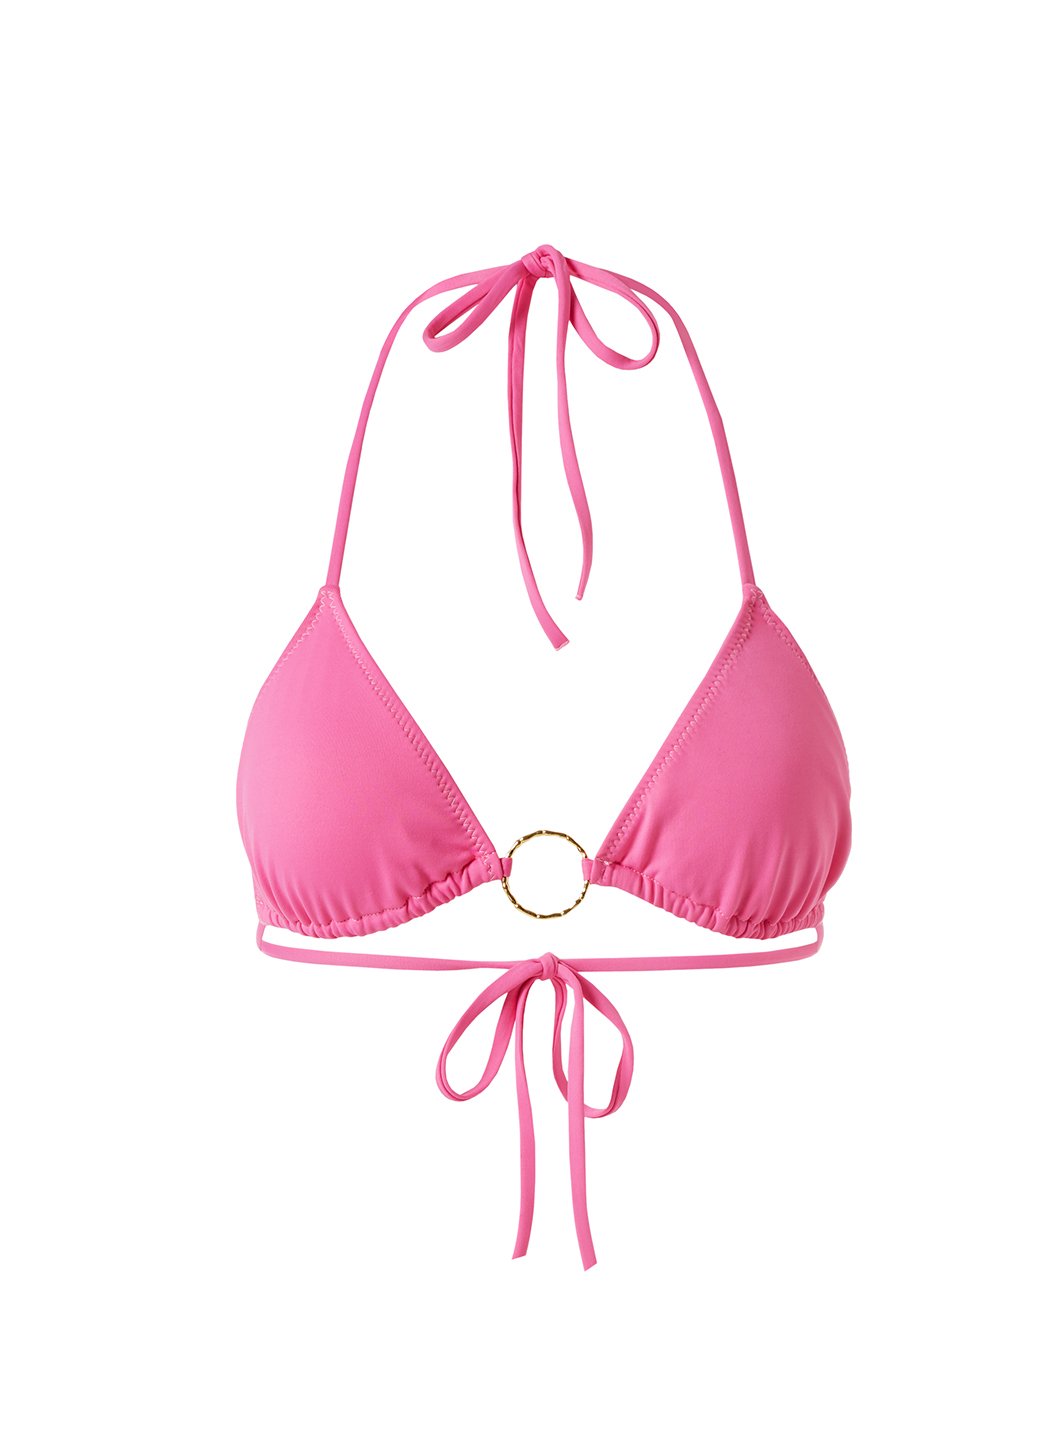 Kilometers Keuze wol Melissa Odabash Miami Flamingo Bikini Top - FINAL SALE | Official Website